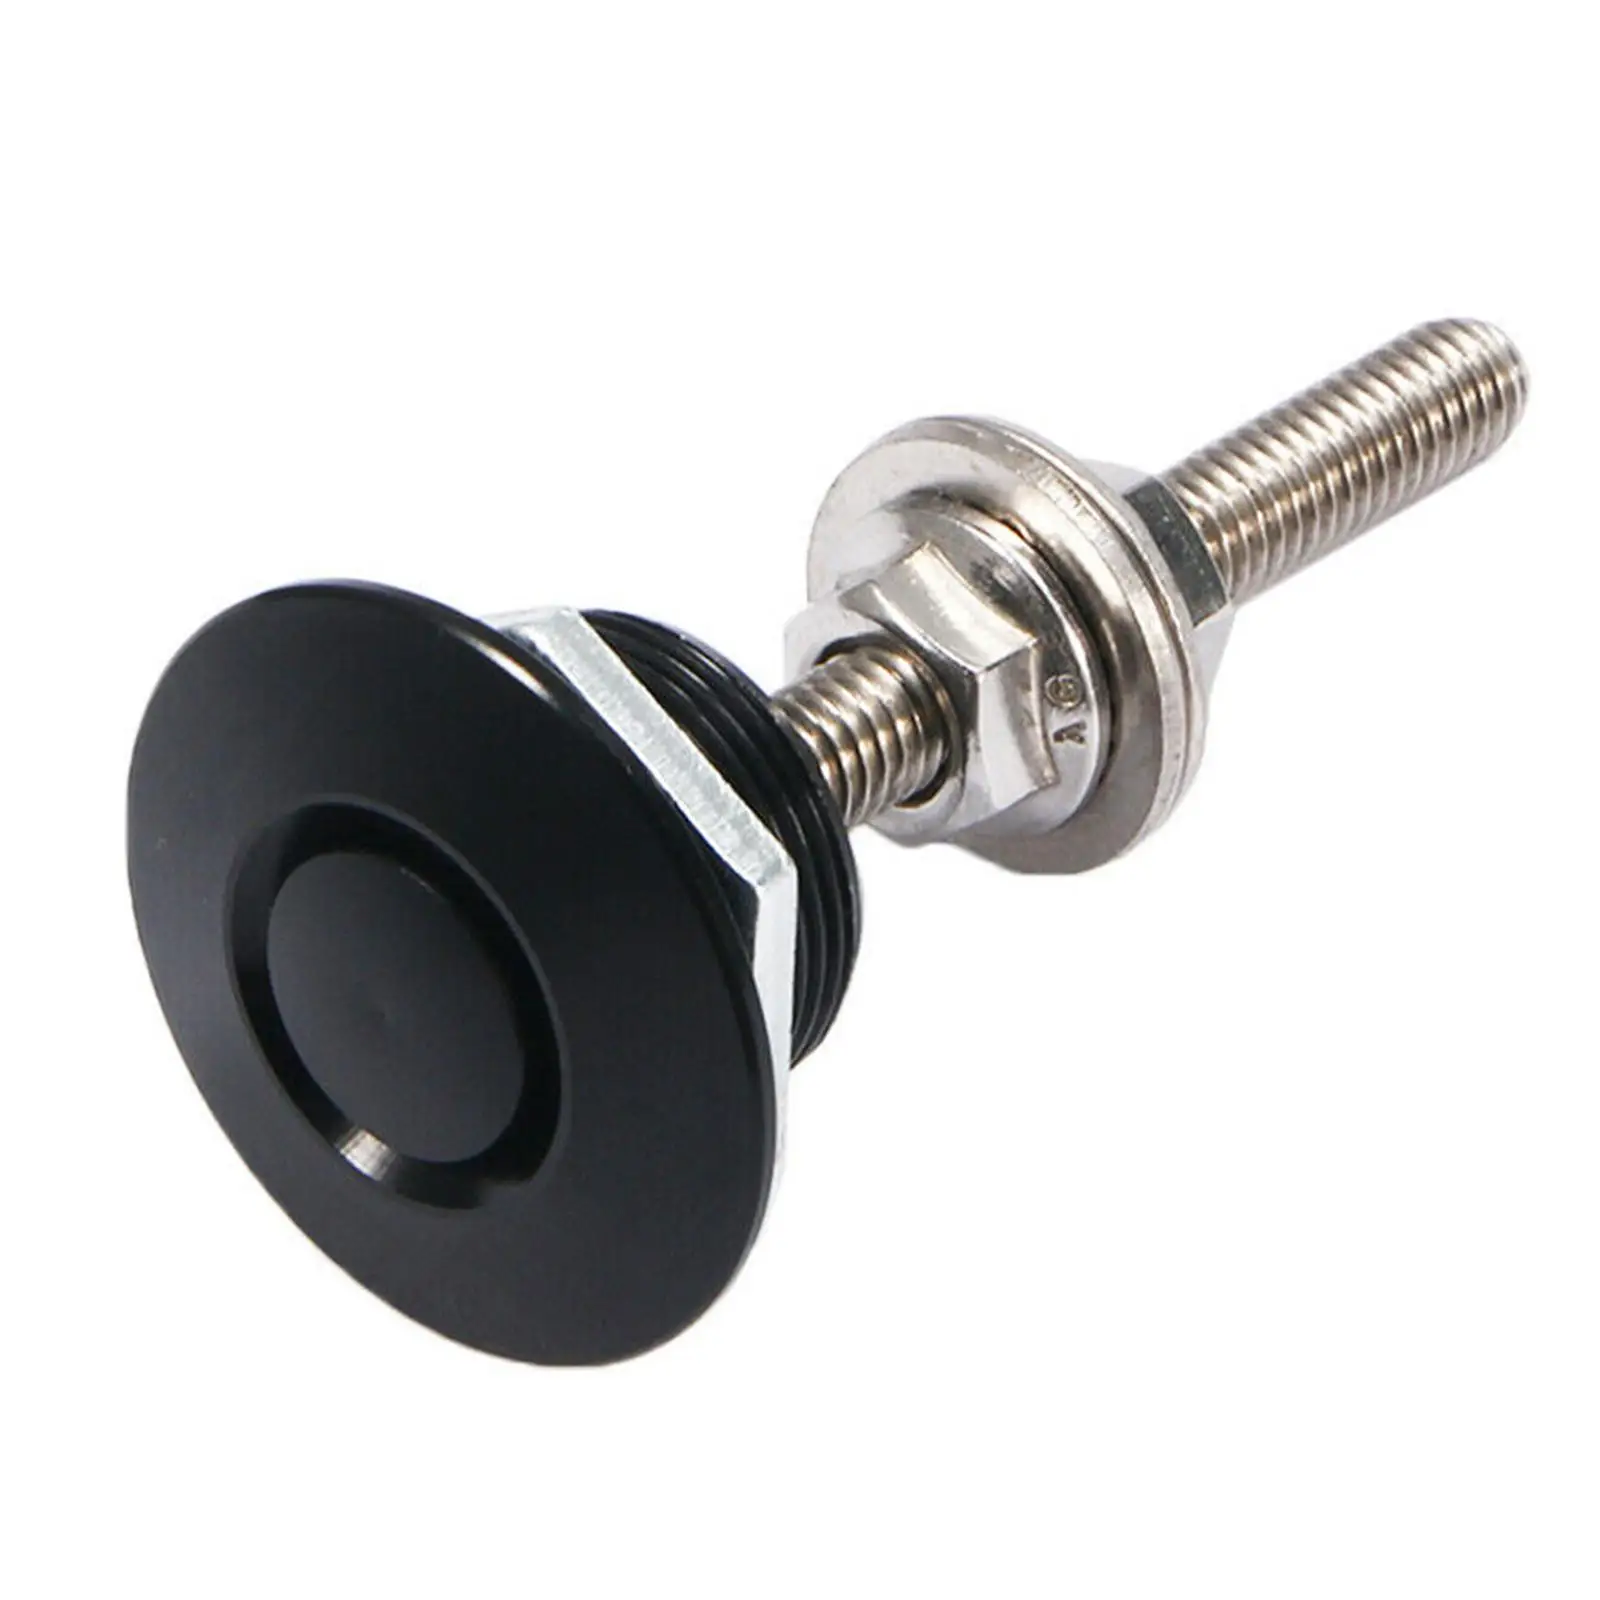 3cm Engine Bonnets Hood Pins Lock Clip Kit Lock Latch Quick Release Aluminum Car Auto Replacement Locking Kit DIY Push Button